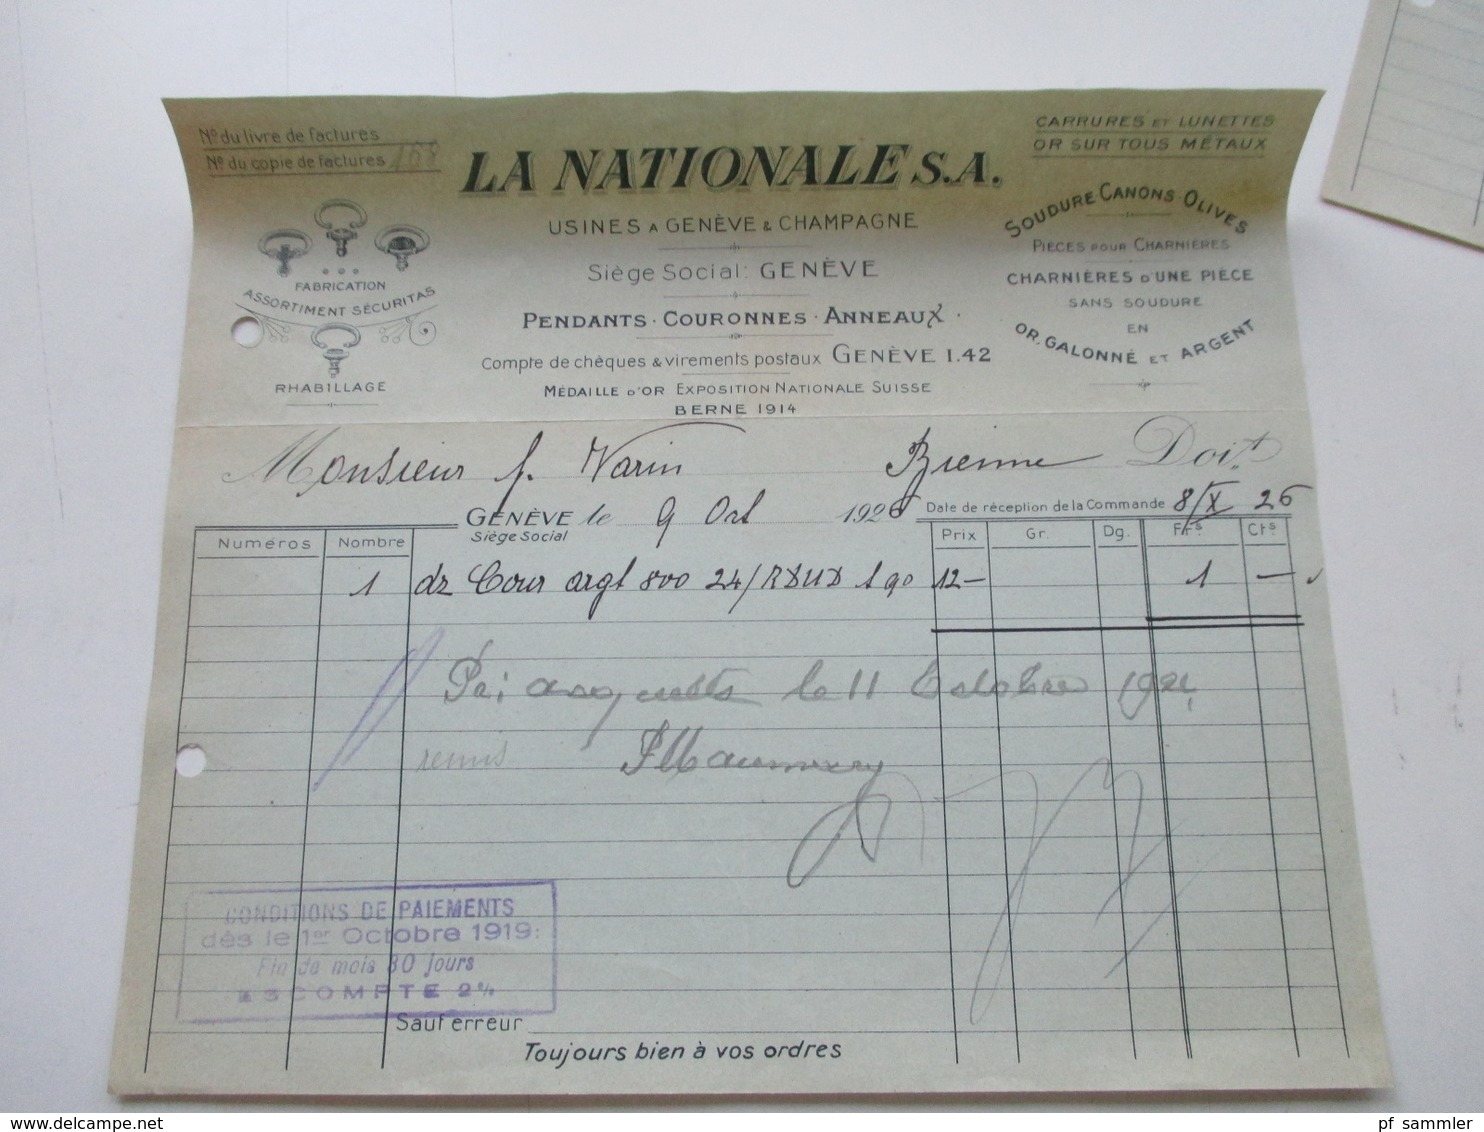 Schweiz 1924 / 26 4 Rechnungen La Nationale S.A. Usines A Geneve & Champagne Fabrication Assortiment Securitas - Suisse